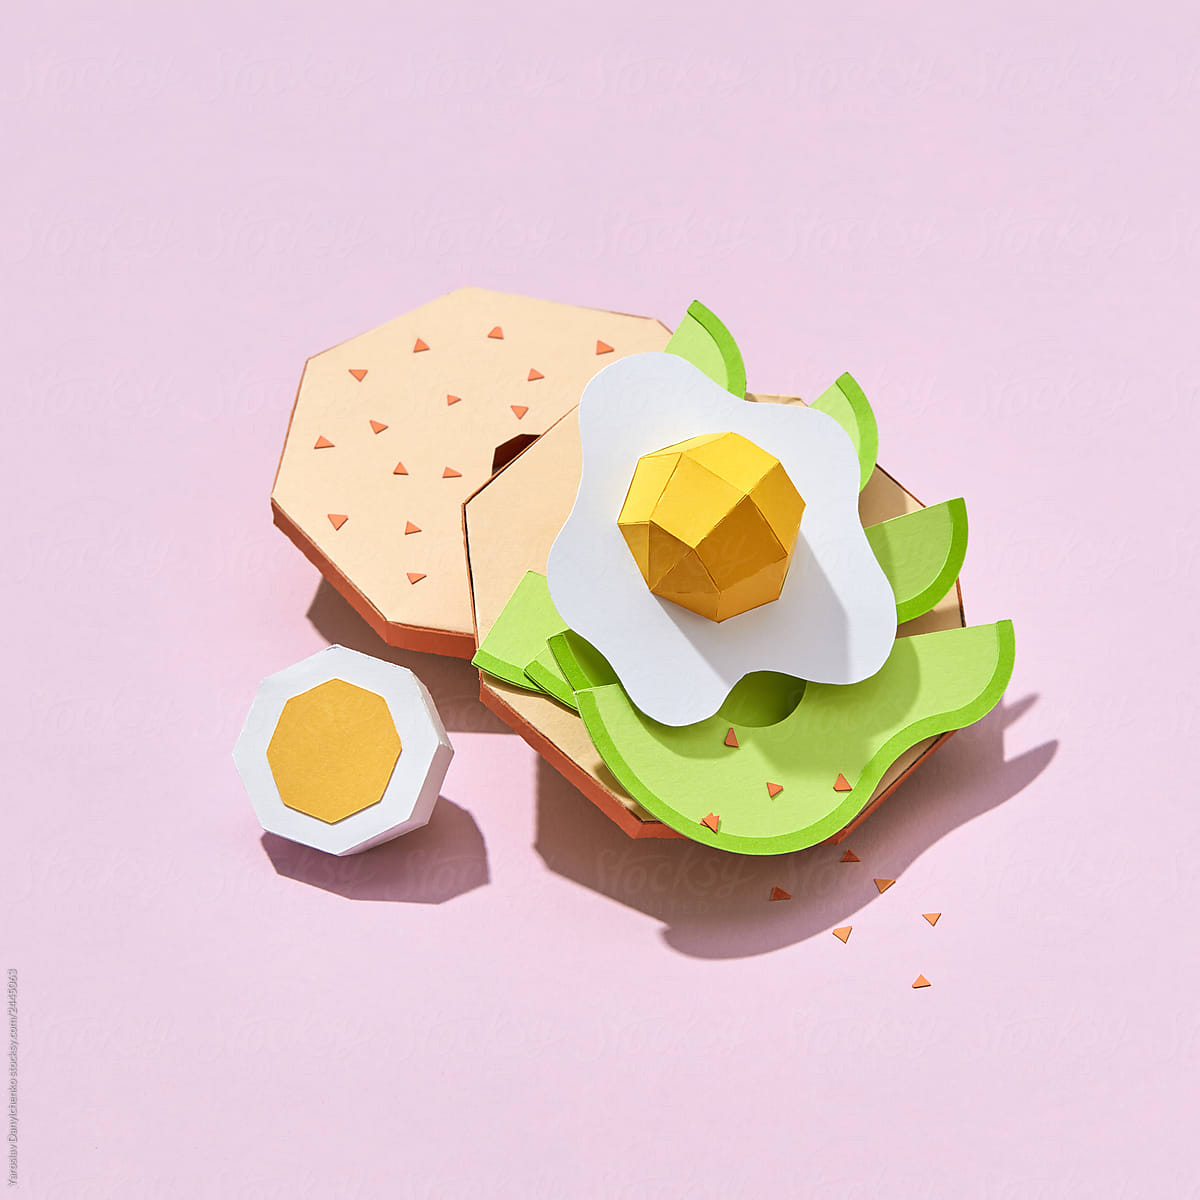 "Paper Handcraft Origami Food - Breakfast Bagel" by Stocksy Contributor